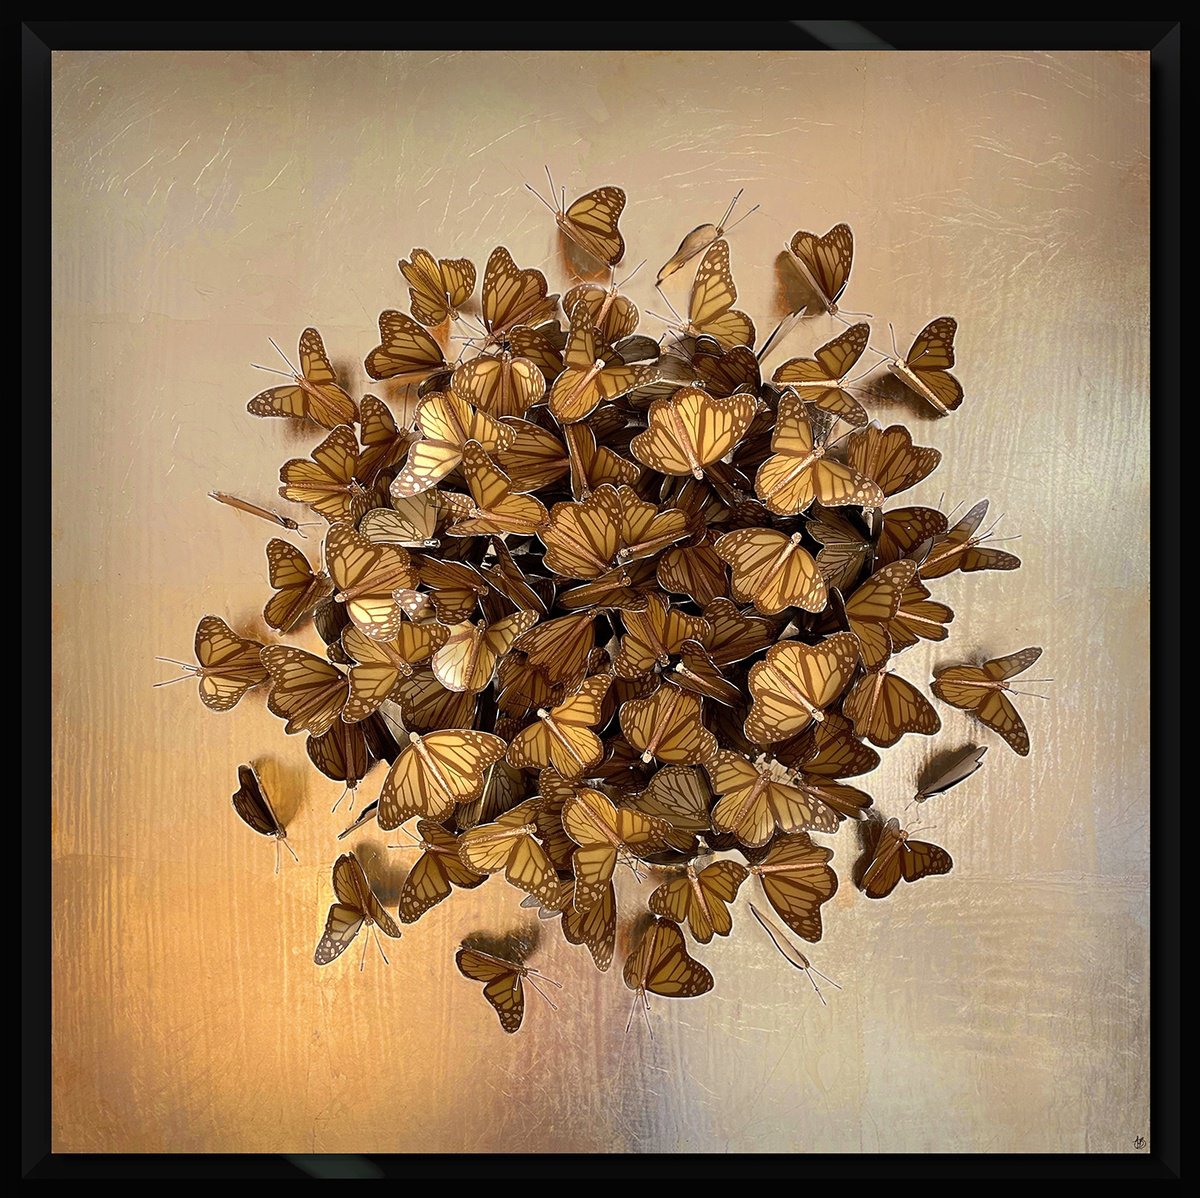 Gold Cluster by Daniel Byrne